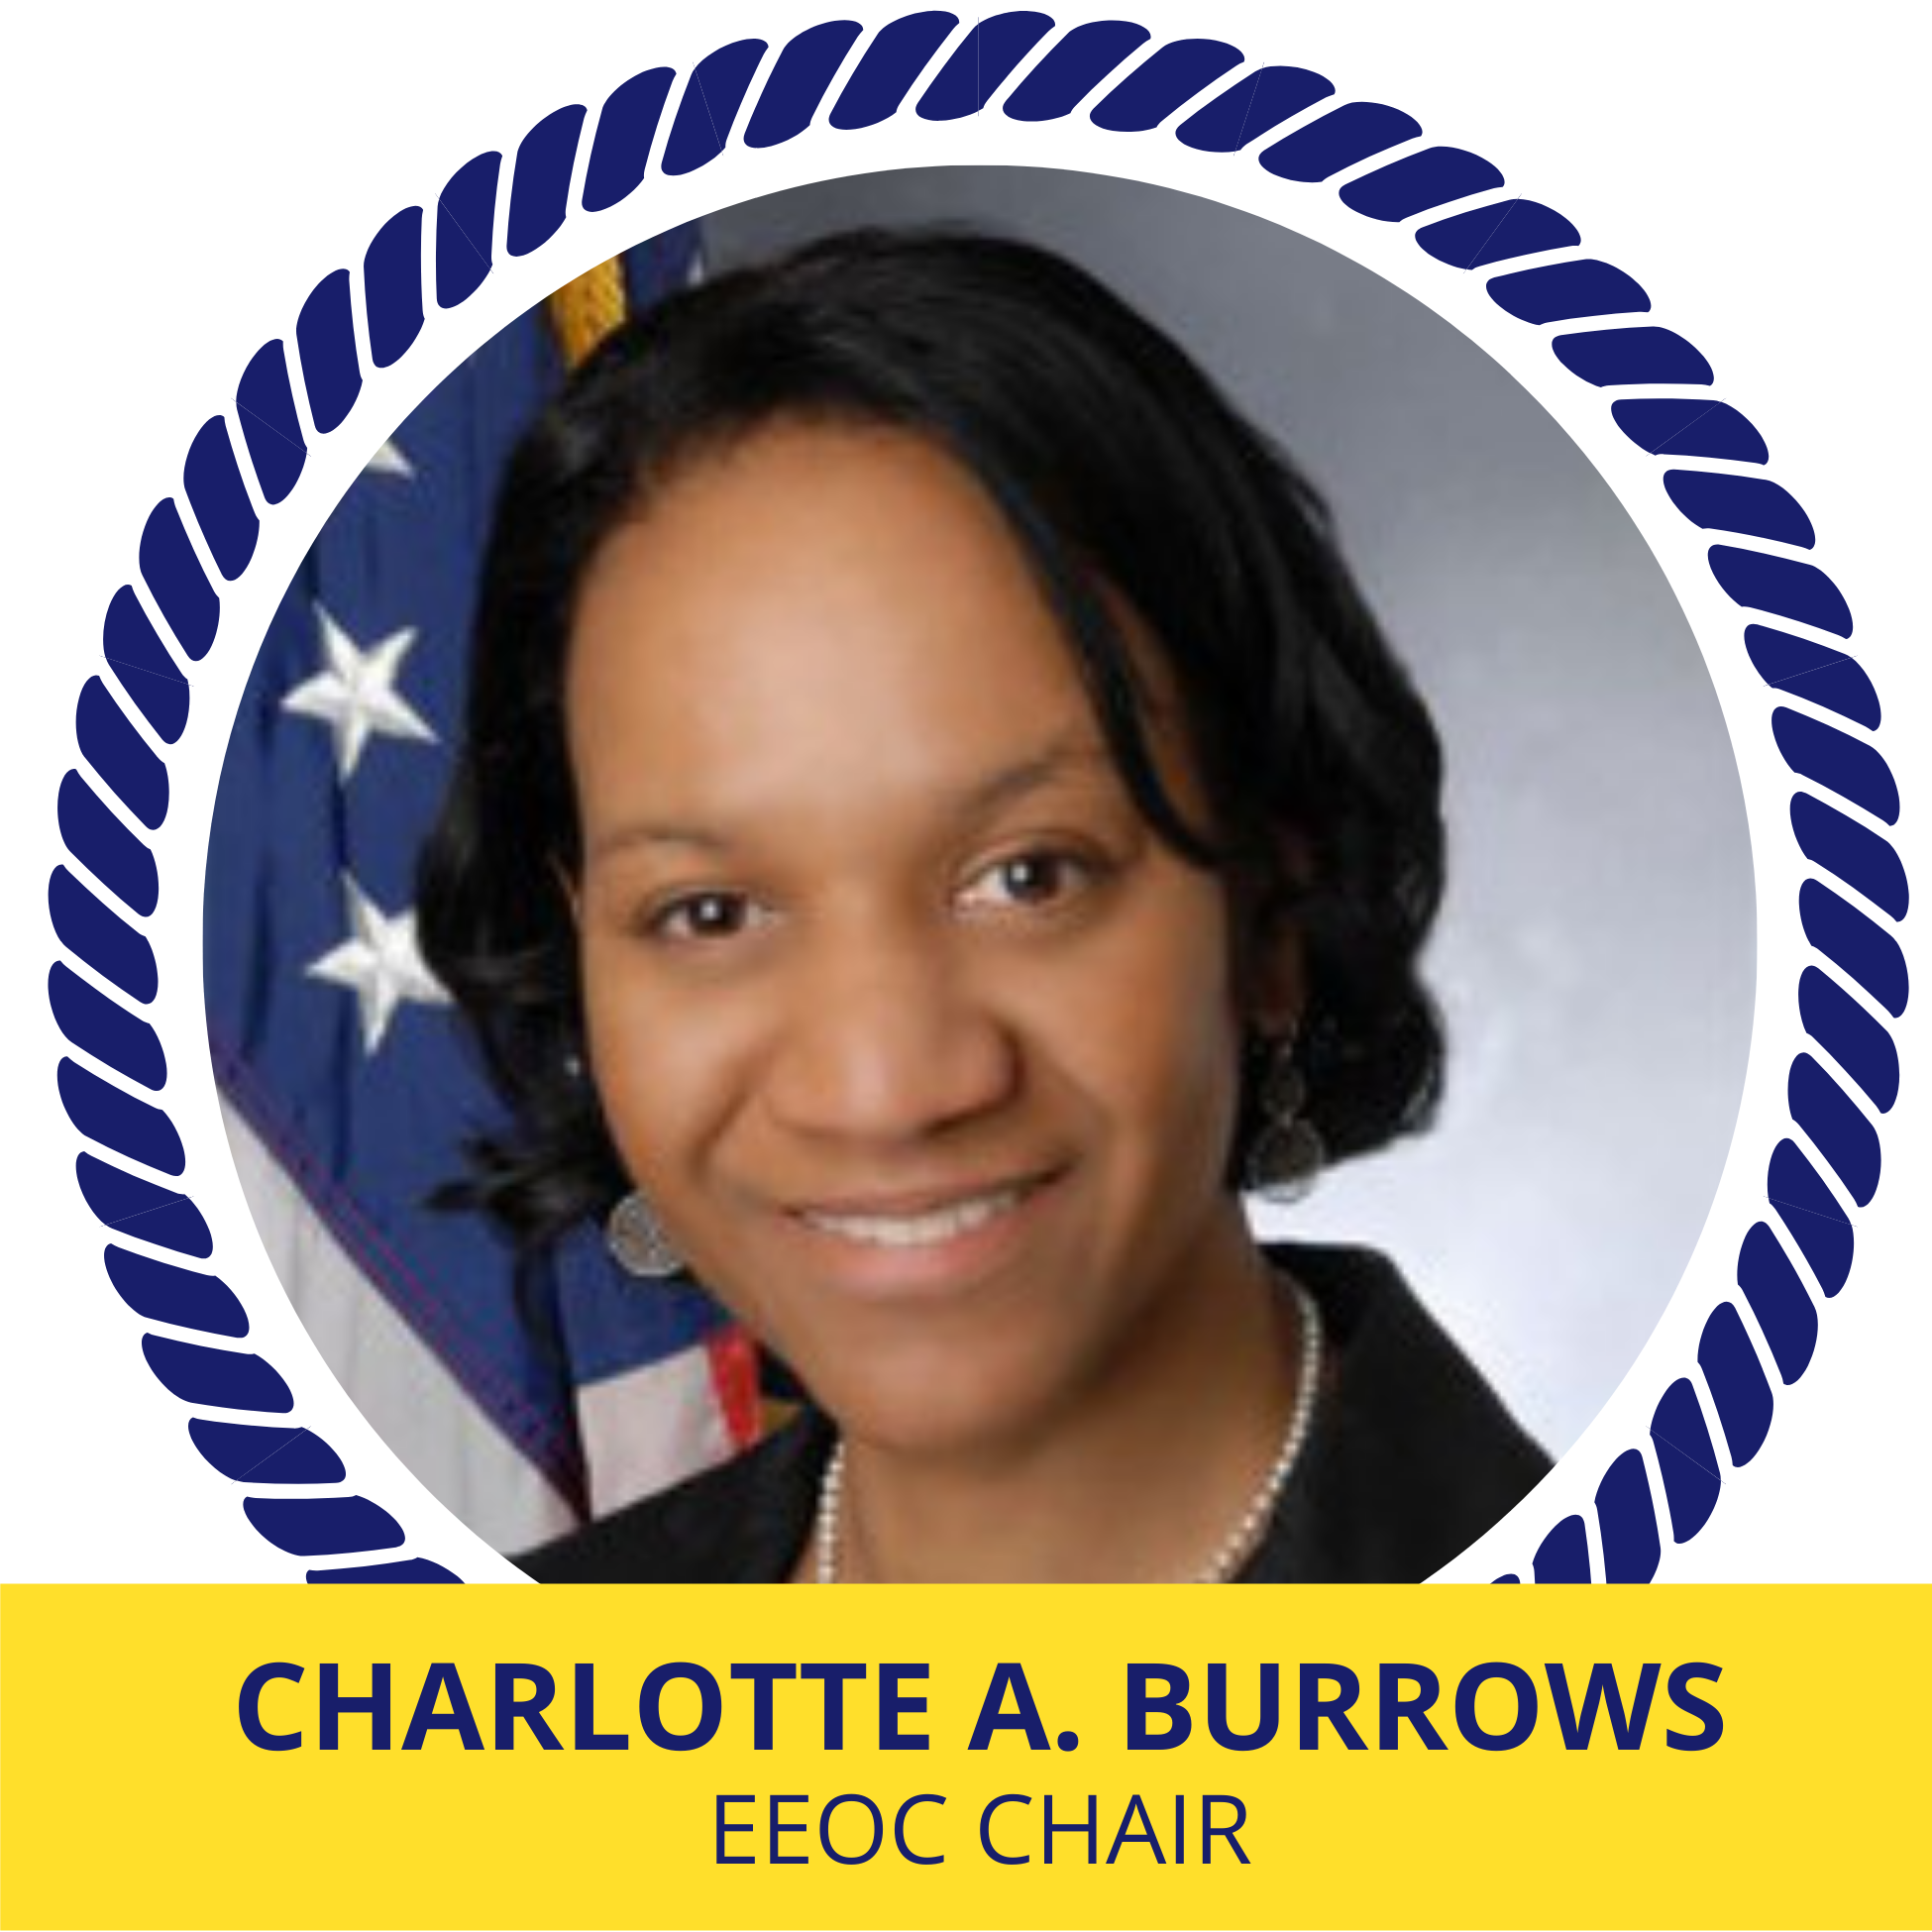 Charlotte A. Burrows